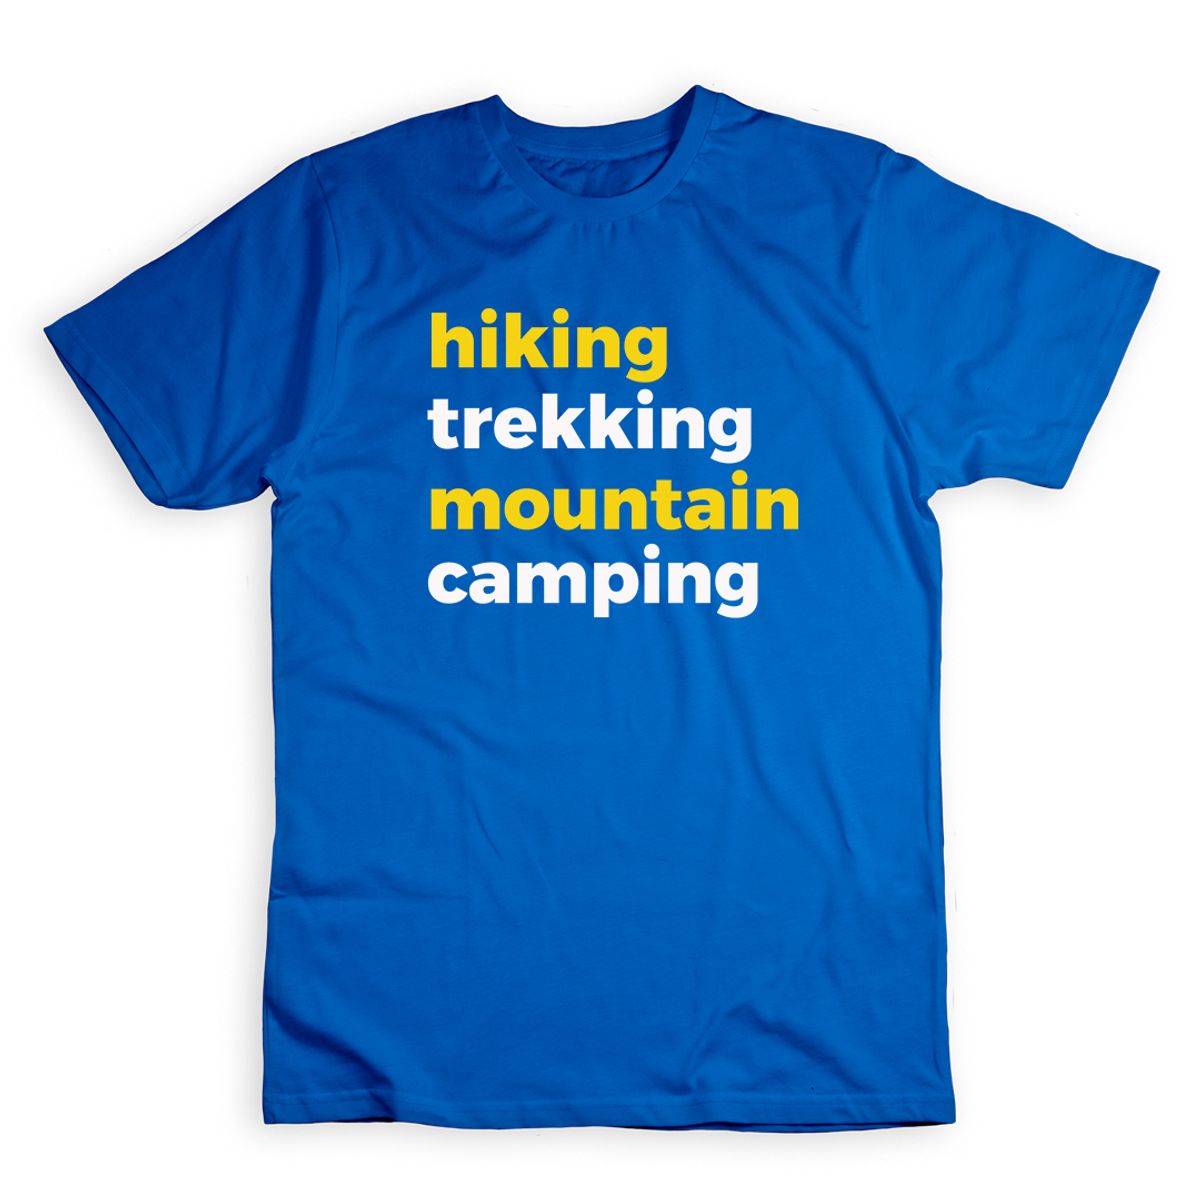 Nome do produto: Hiking trekking mountain camping